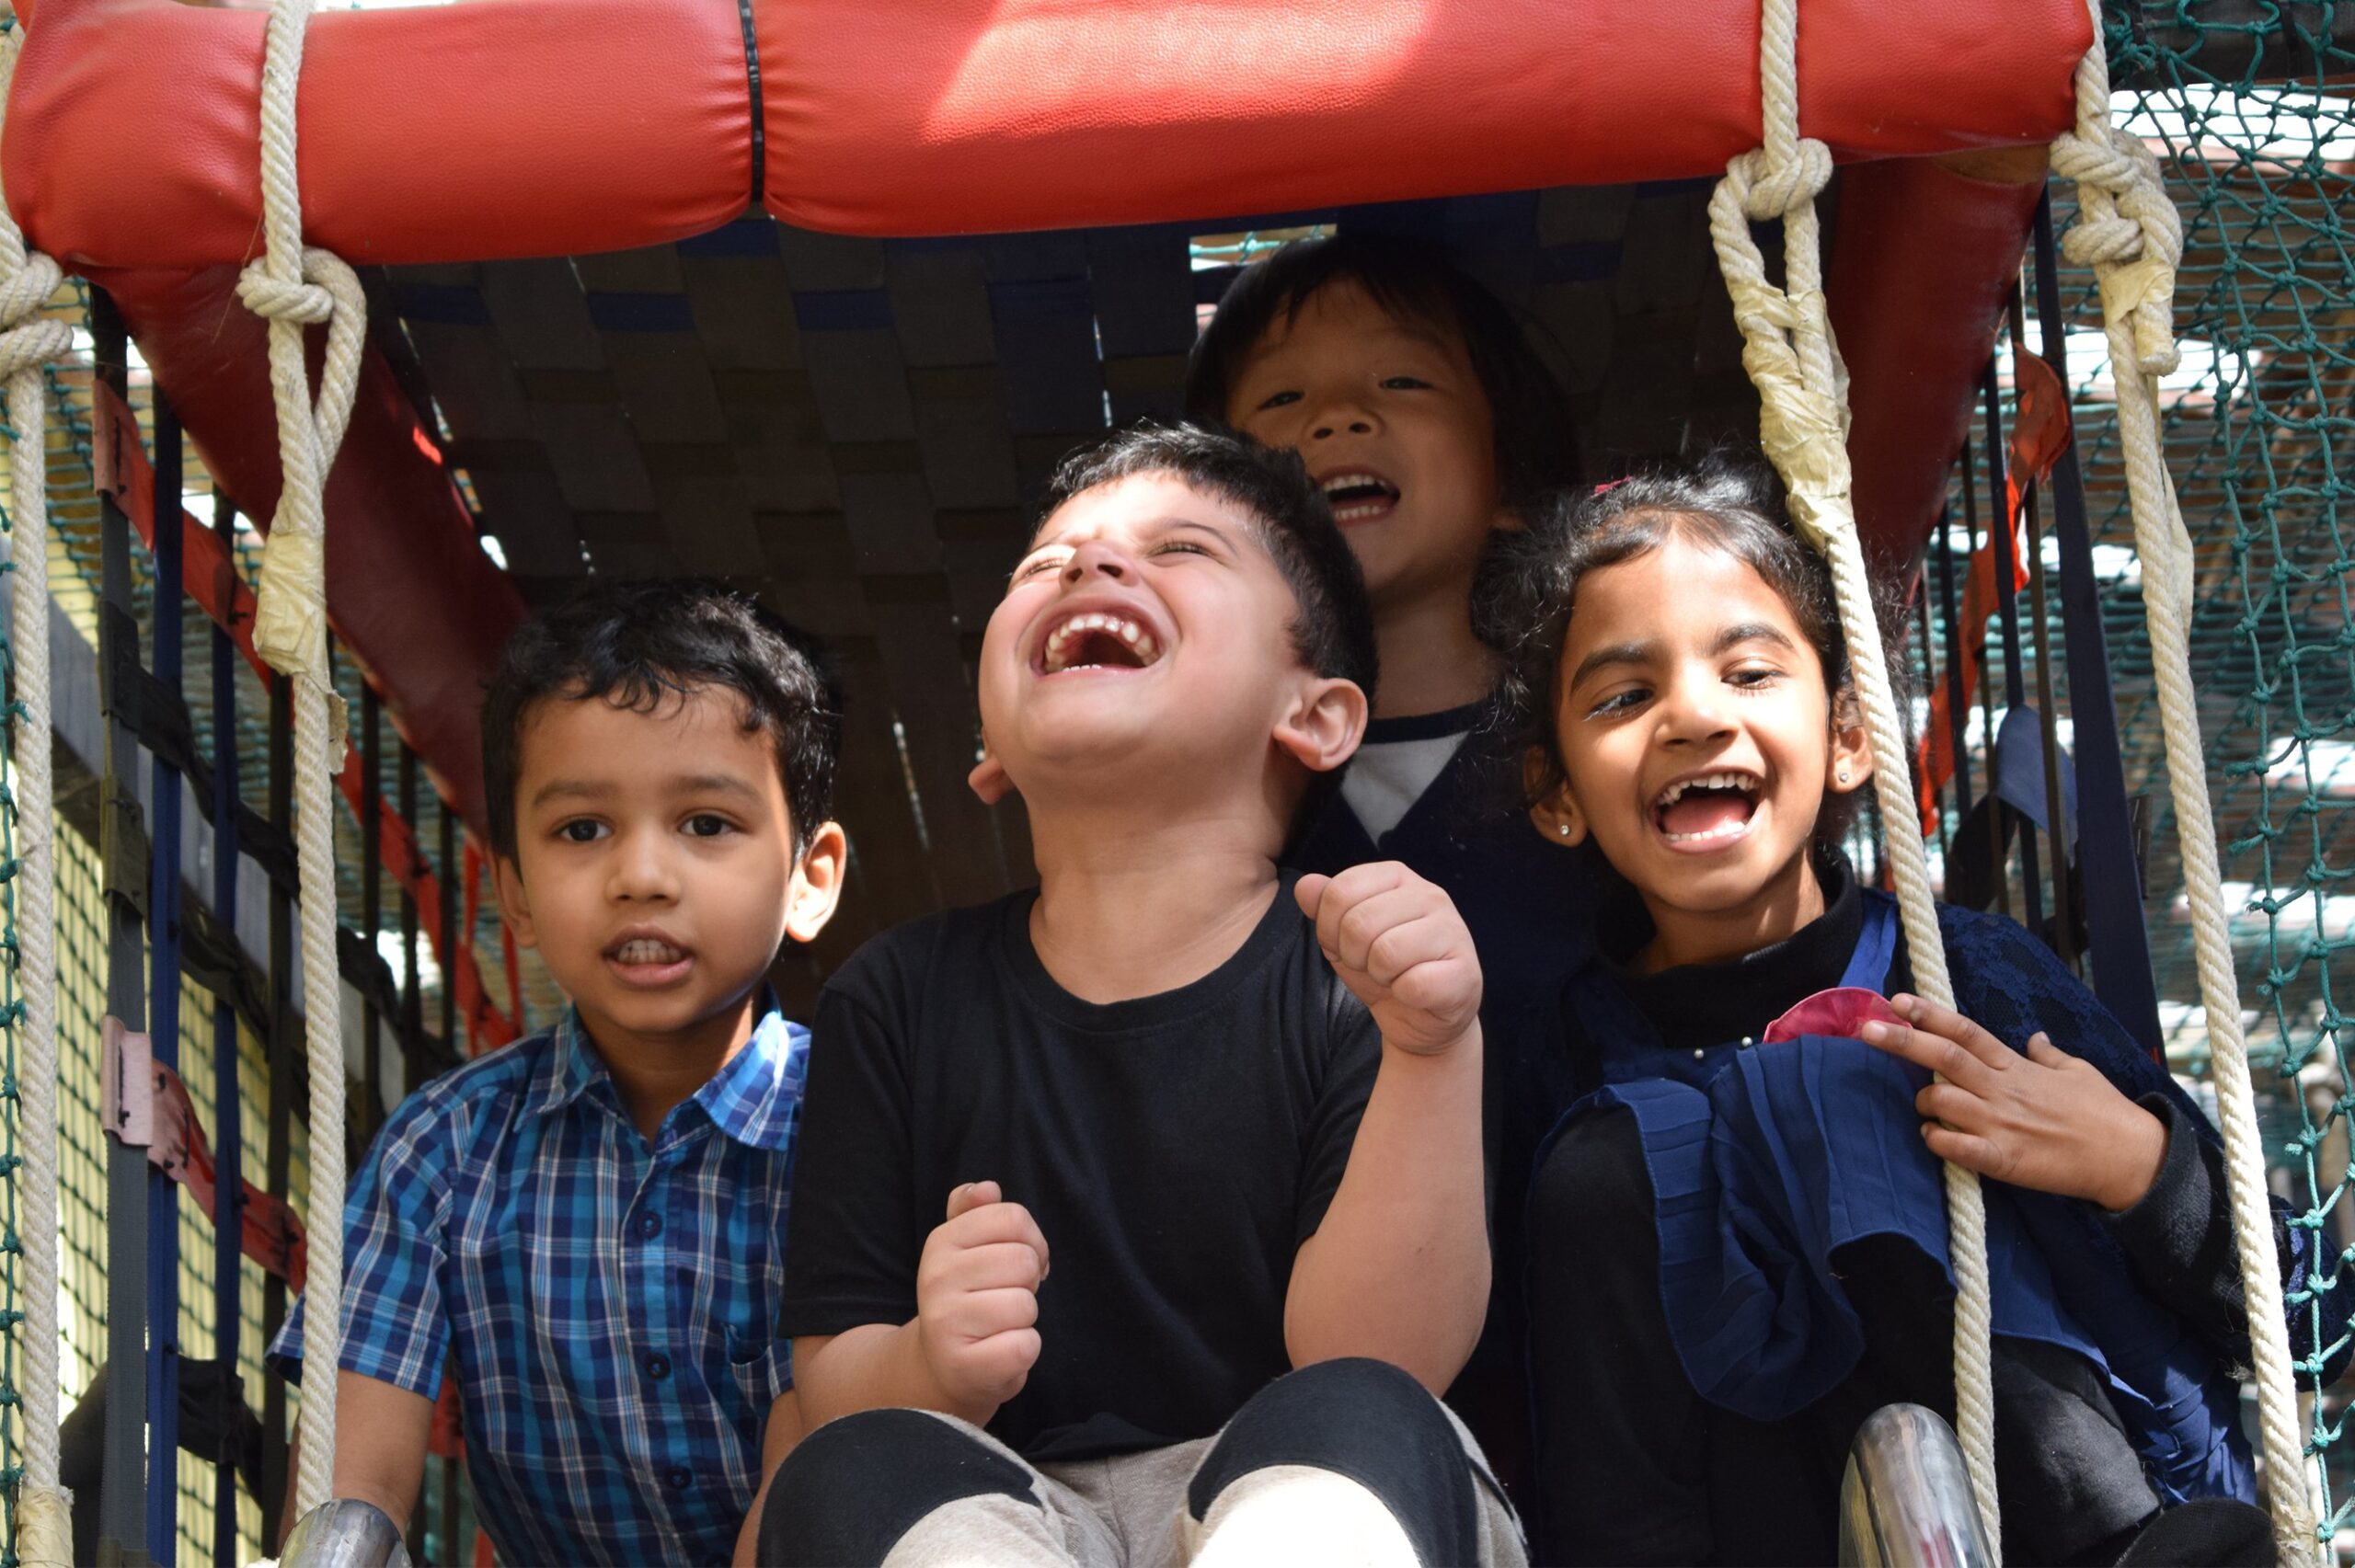 Children's daycare with happiest kids at kara